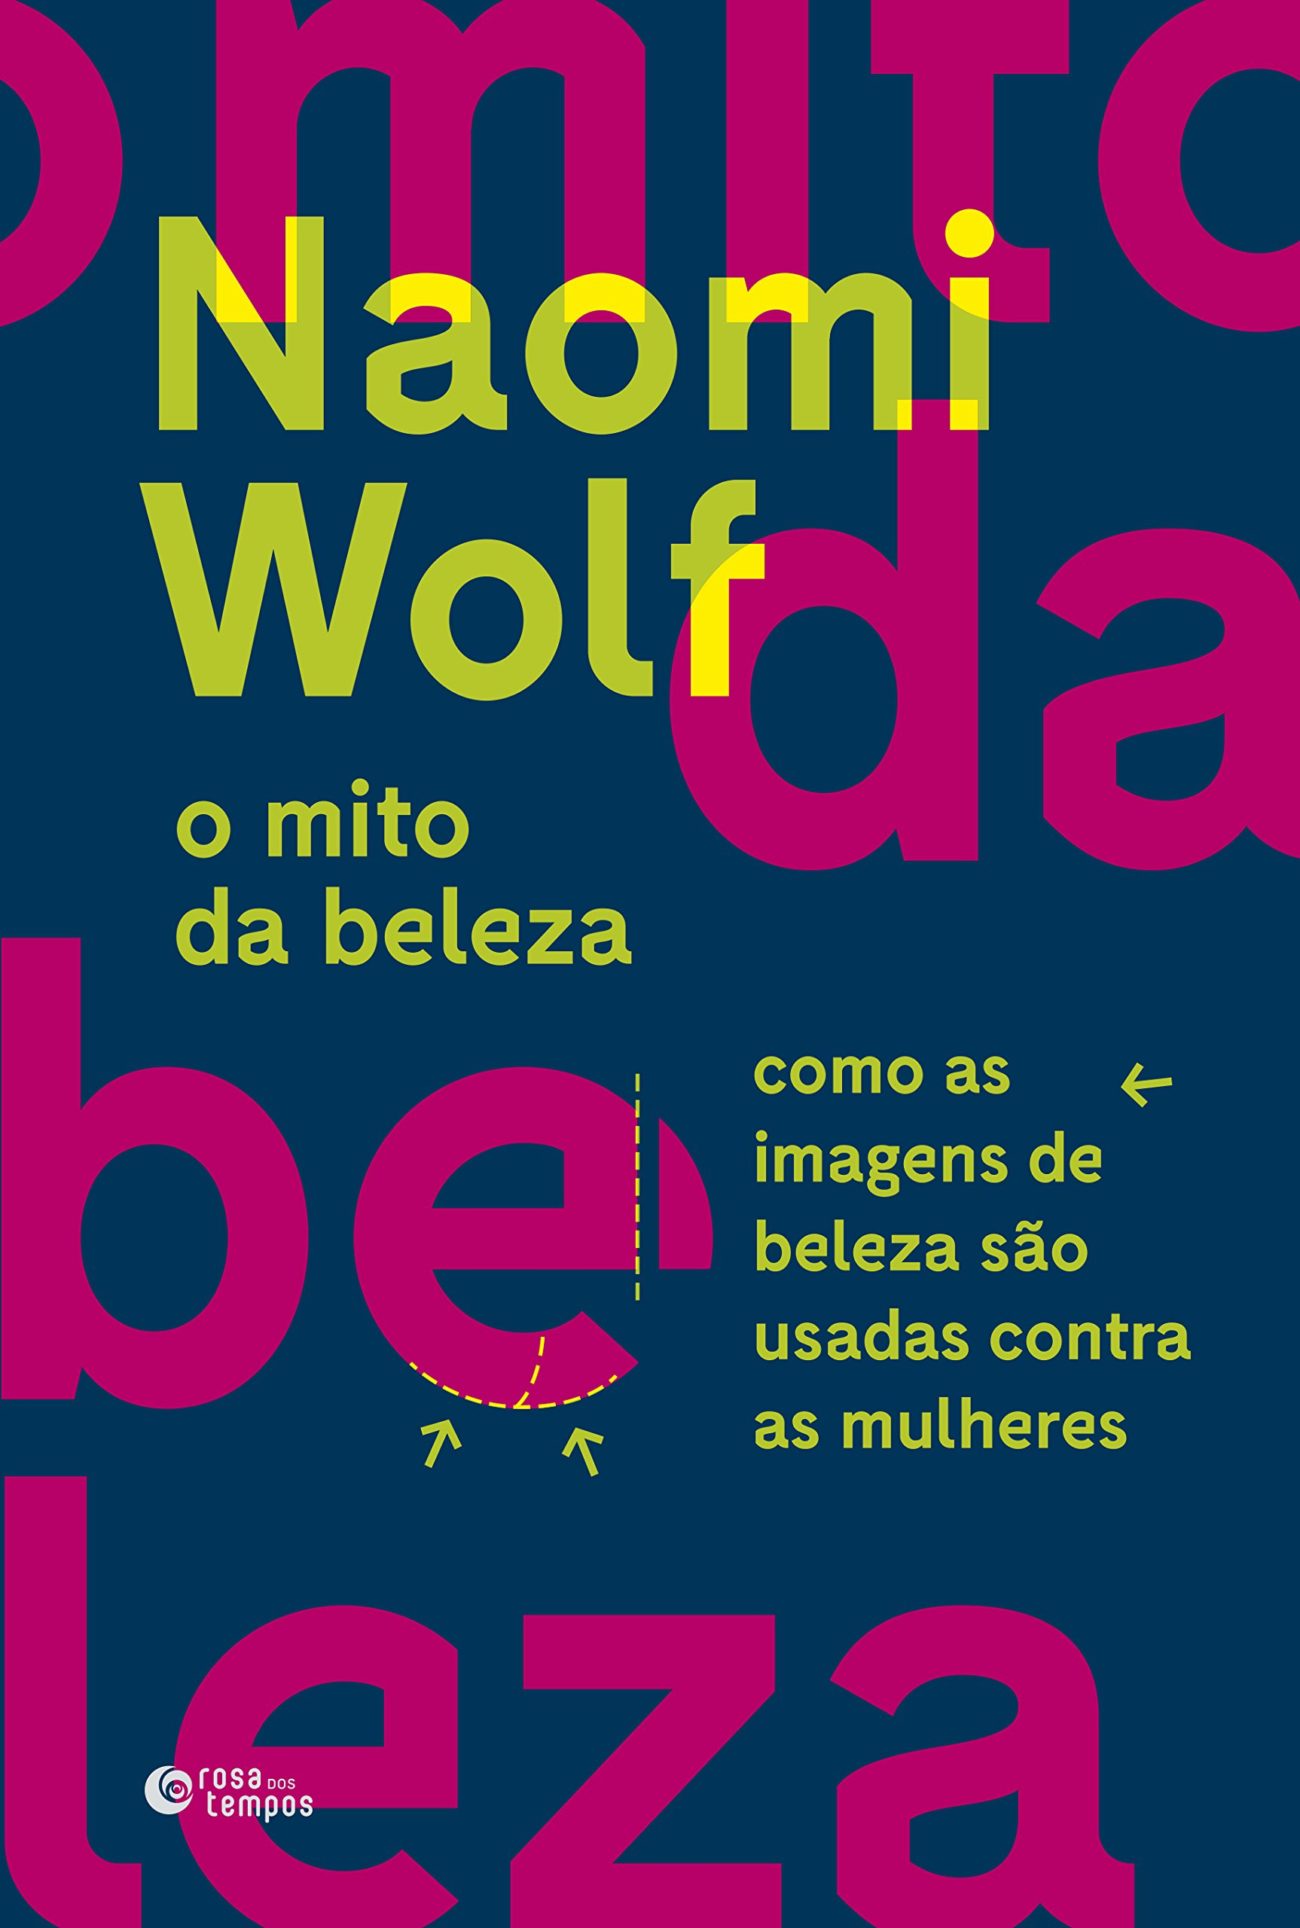 Naomi Wolf